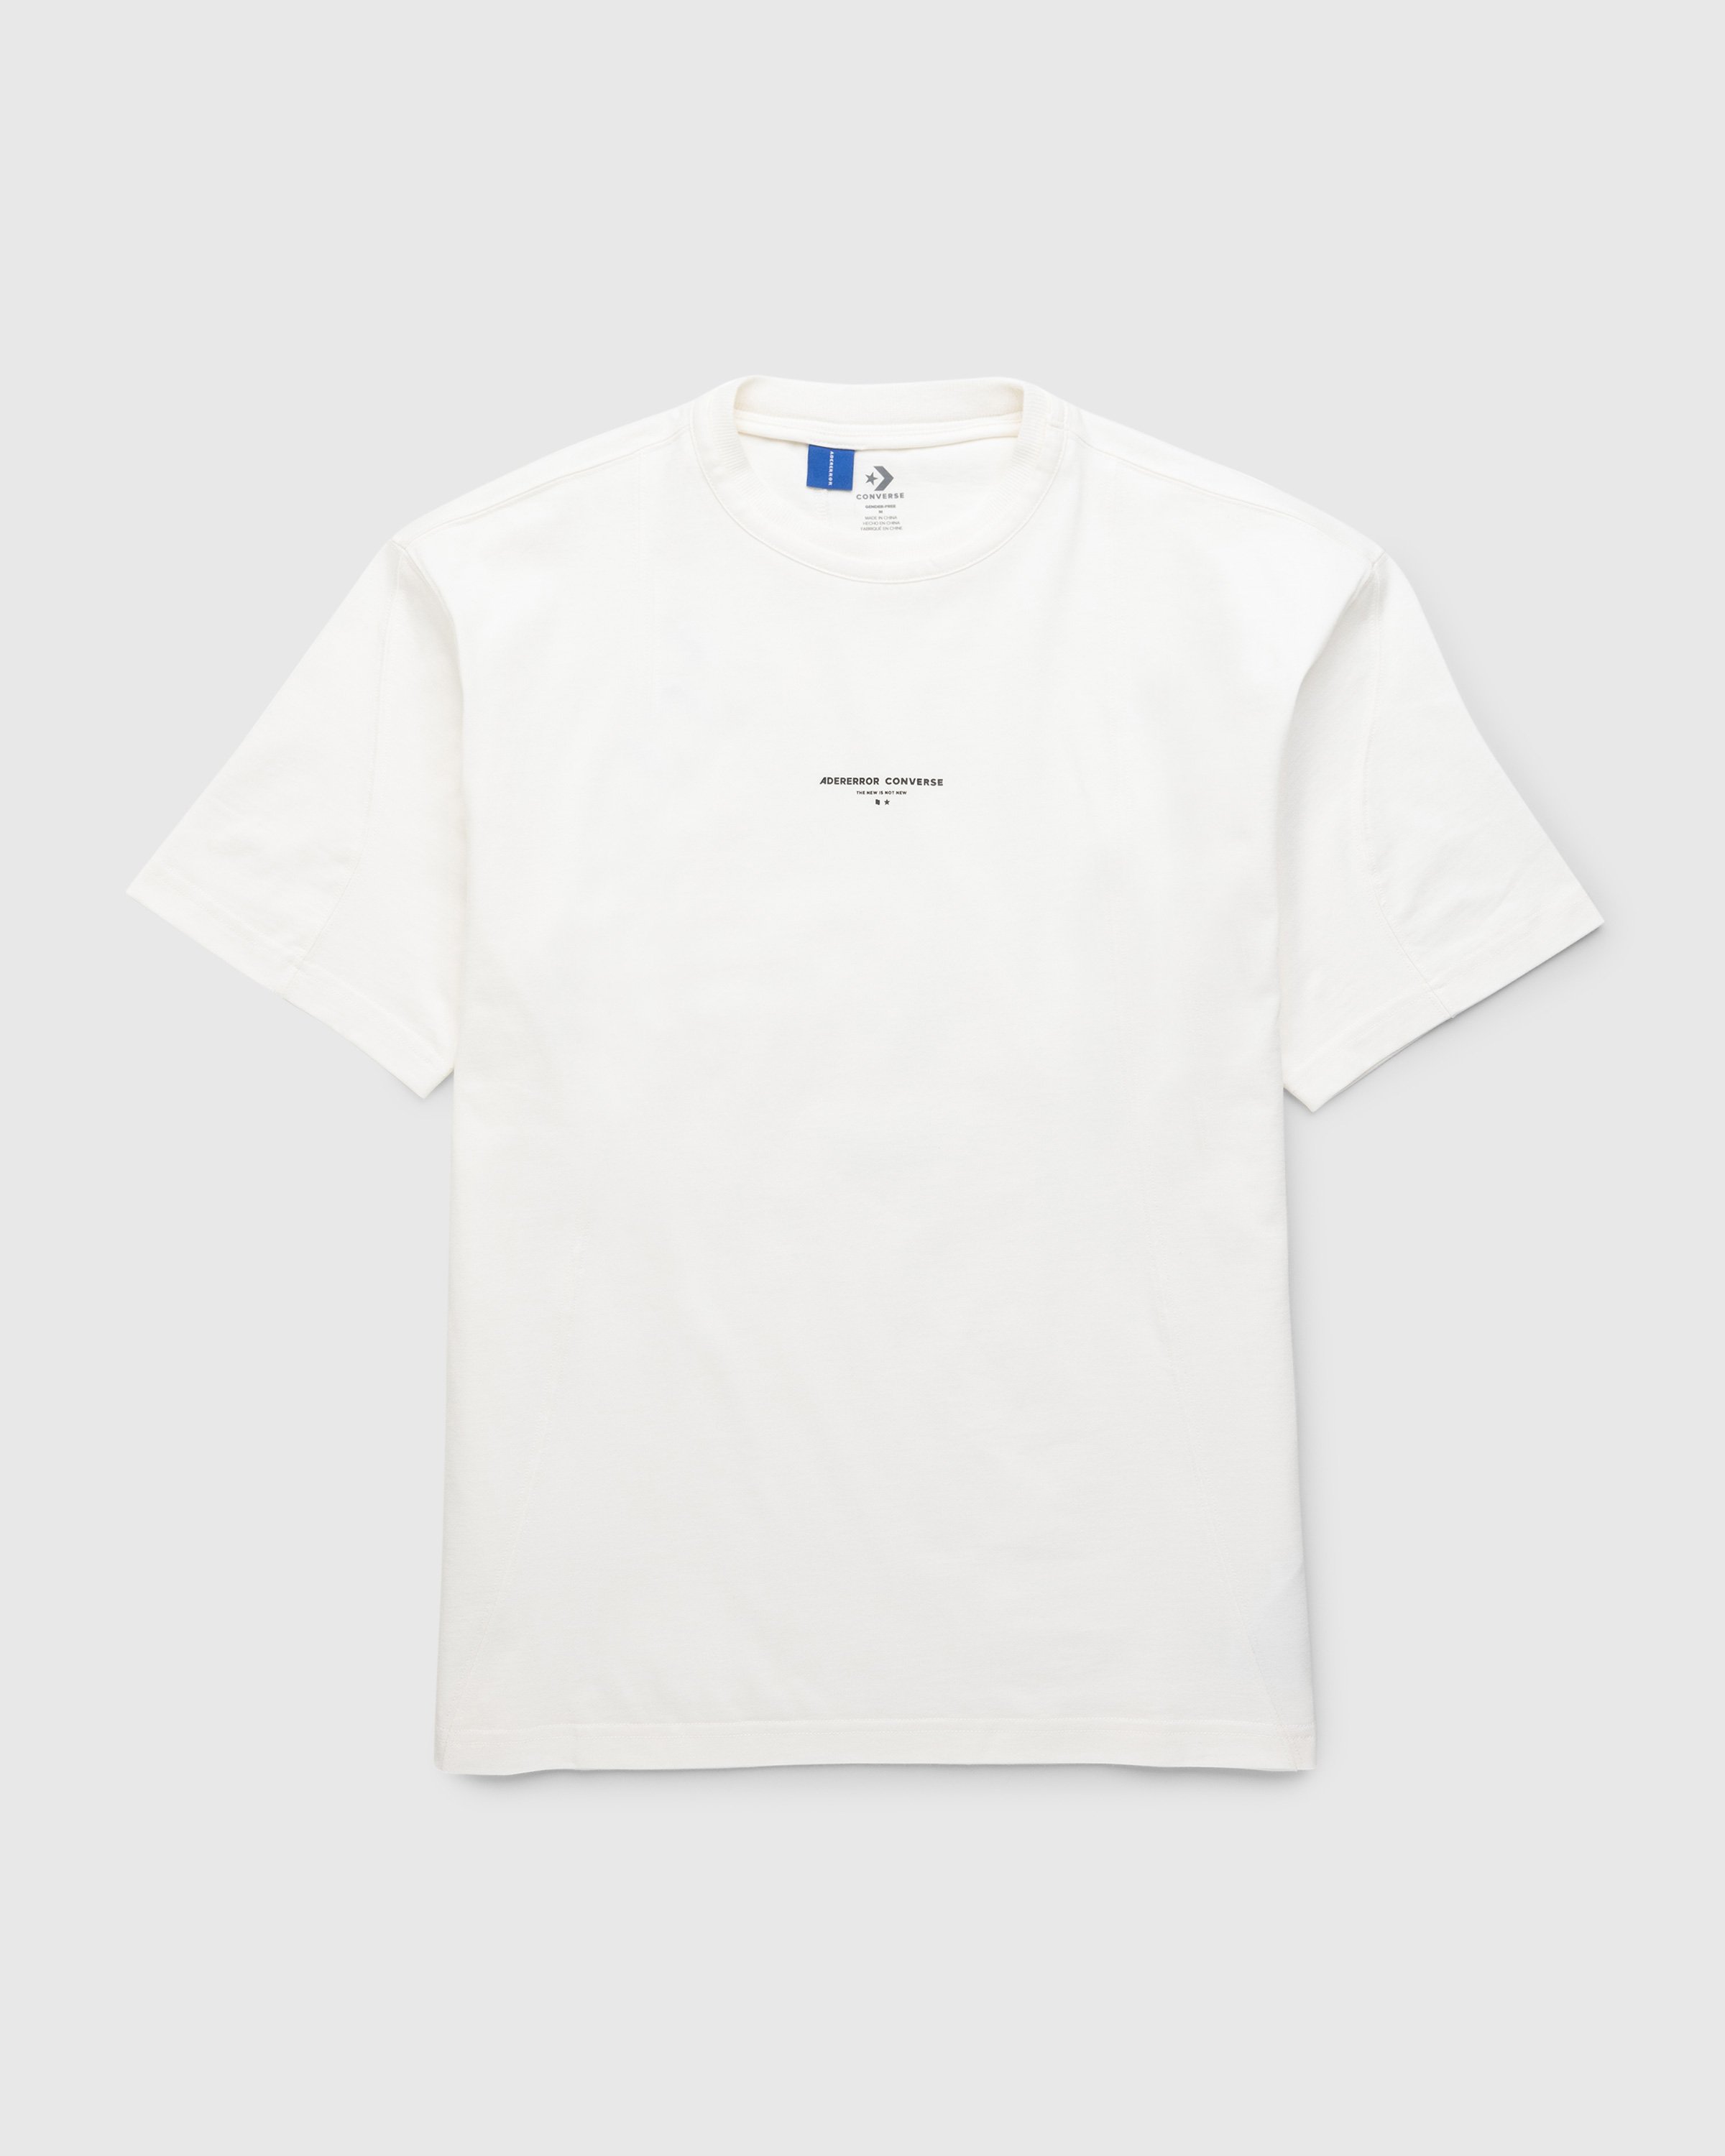 Converse x Ader Error - Shapes T-Shirt Cloud Dancer - Clothing - Beige - Image 1